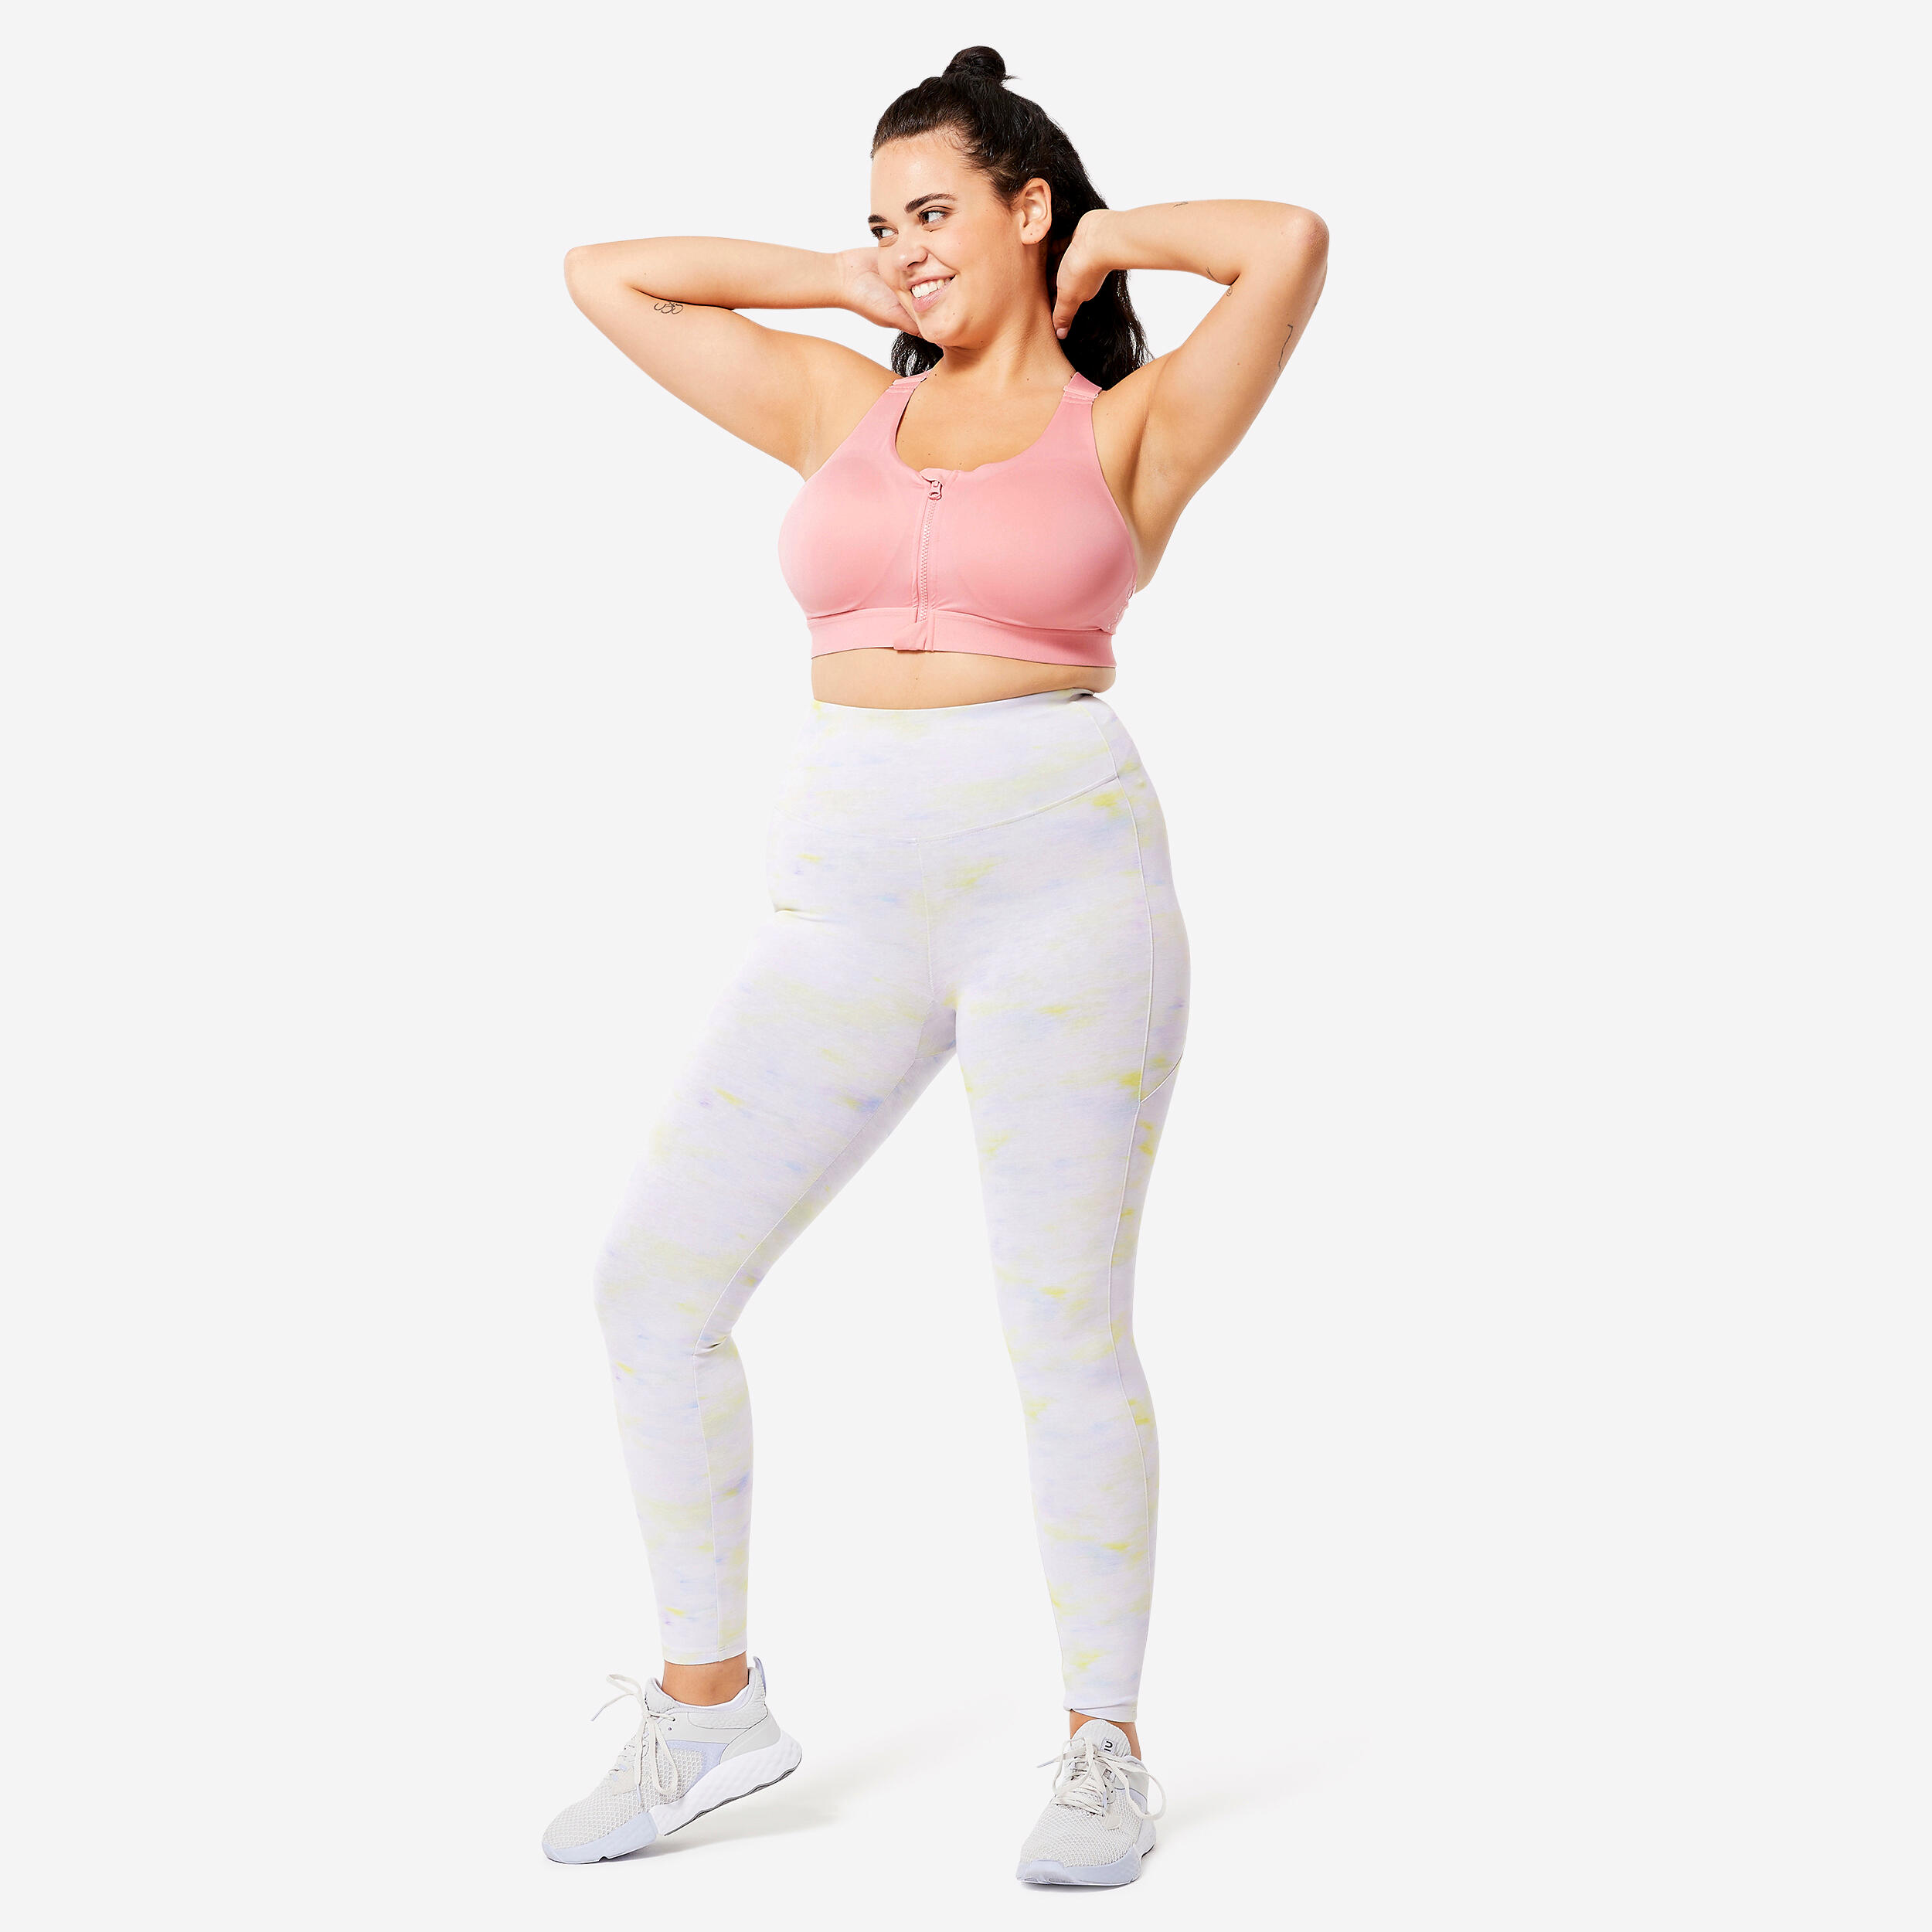 The Workout Sports Bra - Pink – MBody